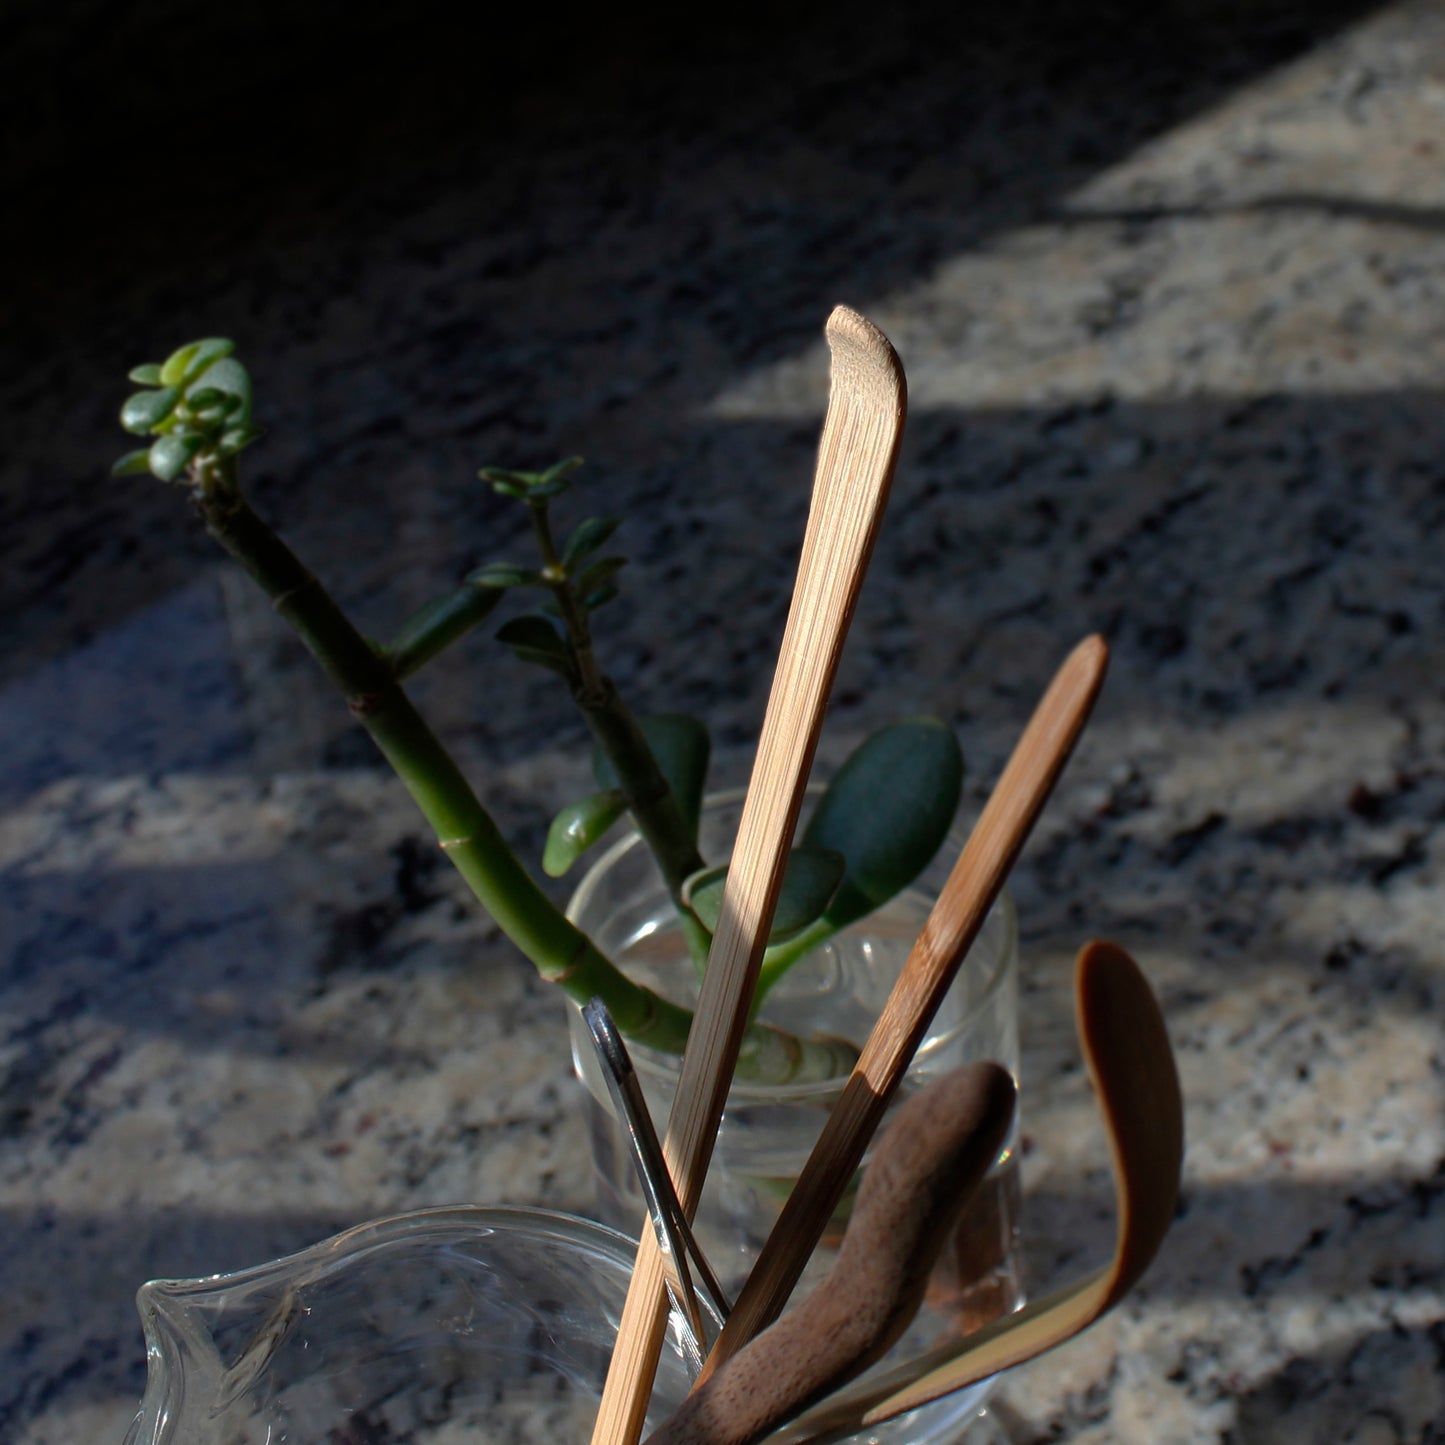 Bamboo Tea Rake - with other tools